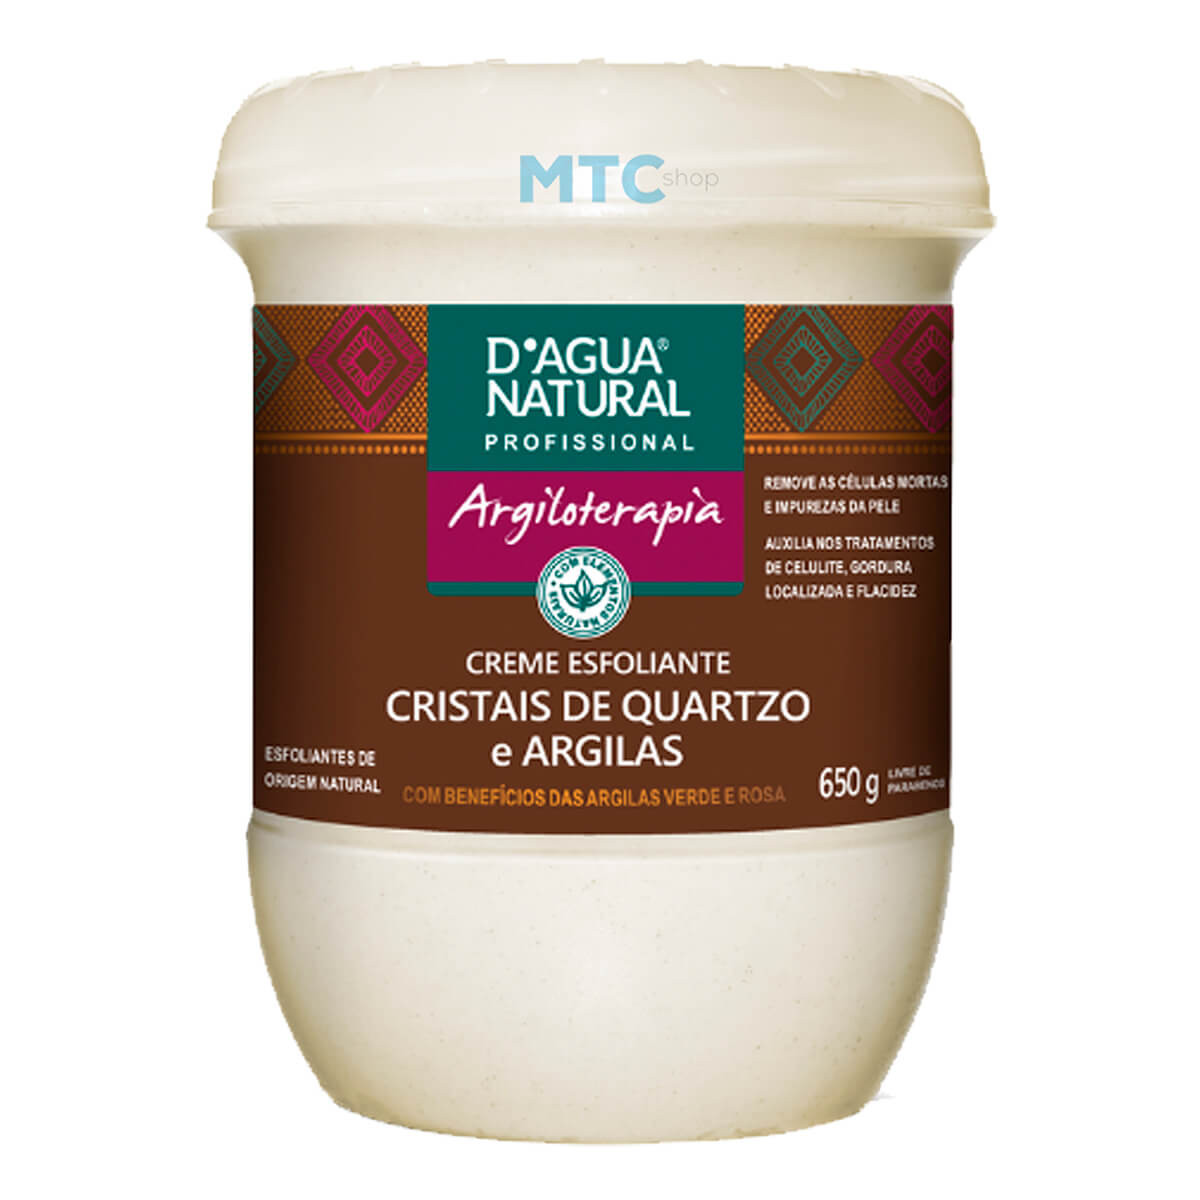 Creme Esfoliante c/Cristais de Quartzo e Argilas - 650g - D'Agua Natural